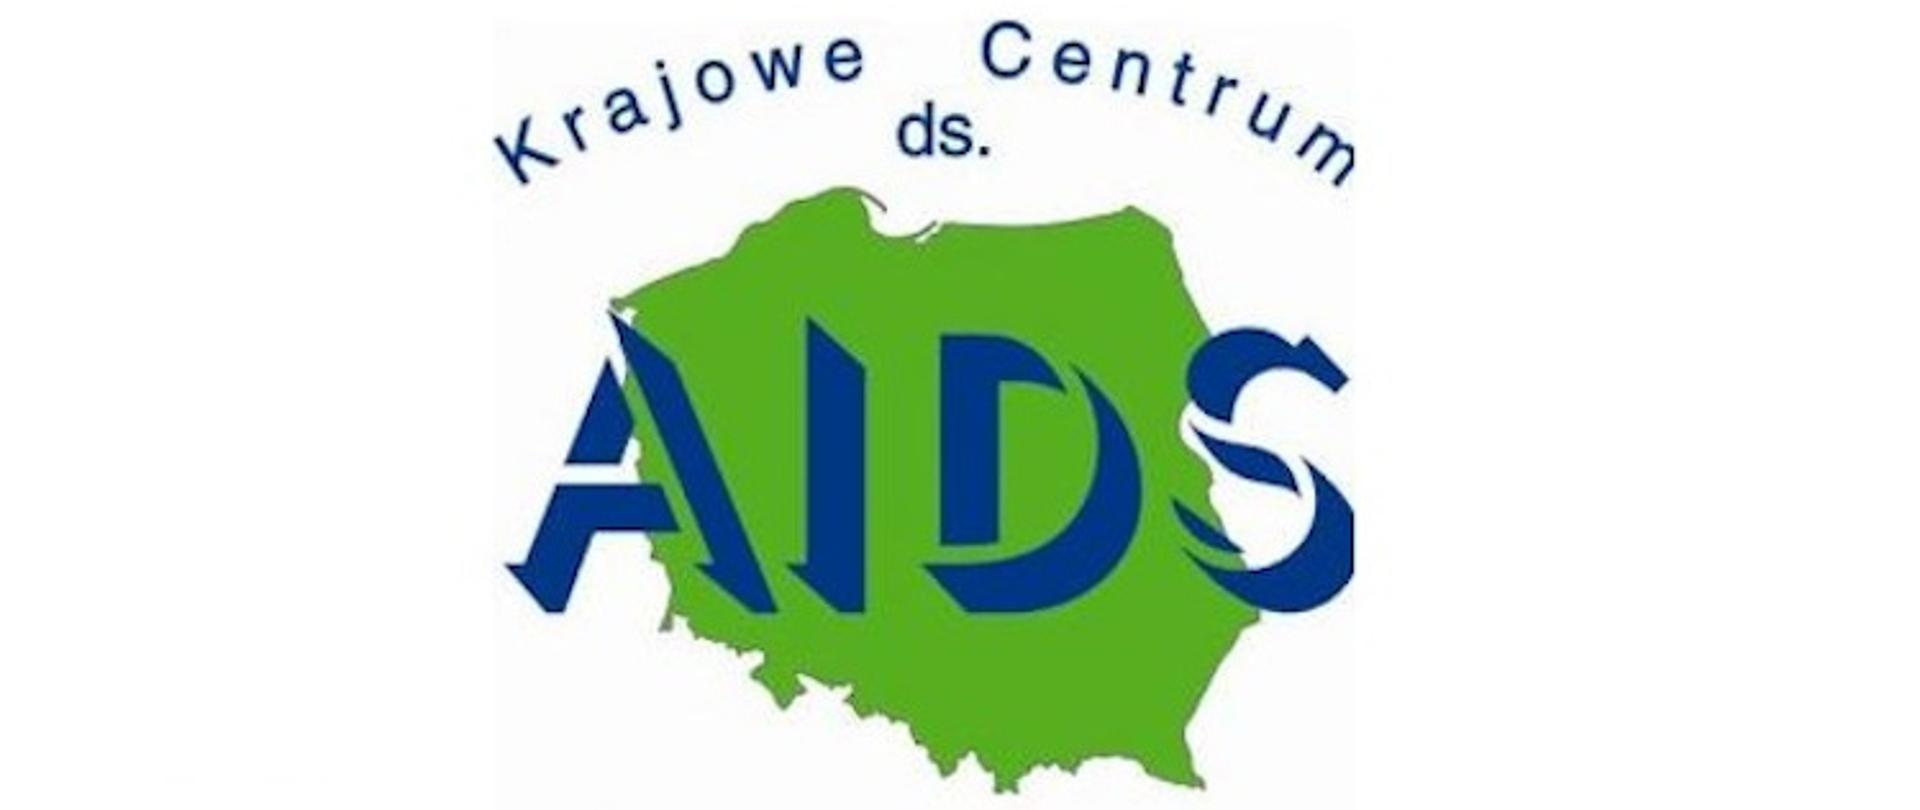 krajowe centrum ds aids